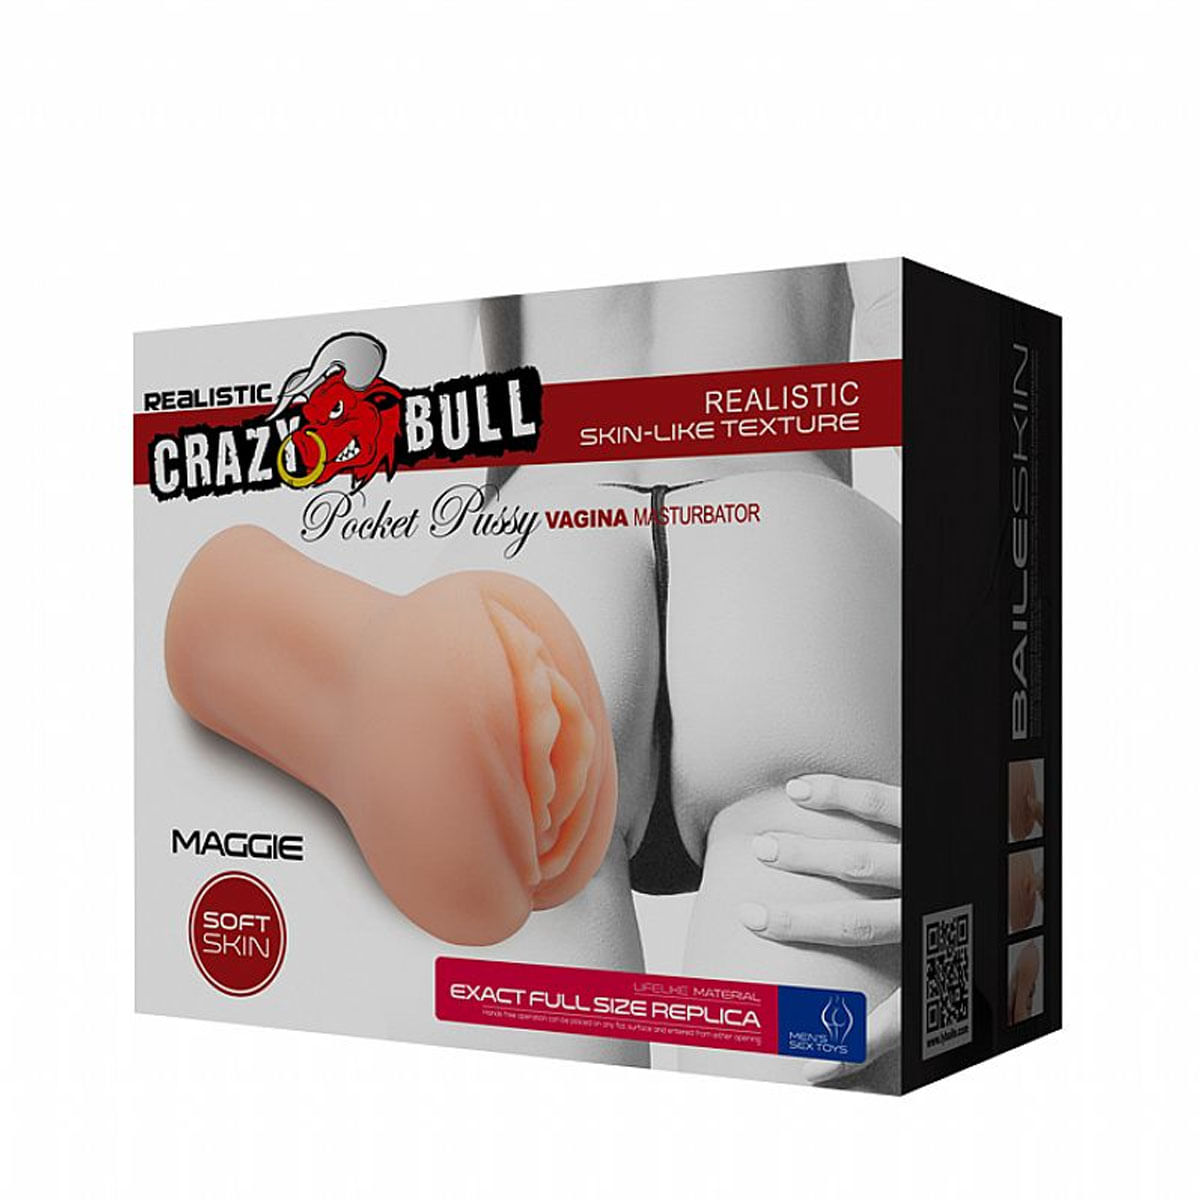 The Realistic Crazy Bull Vagina Masturbador Masculino em CyberSkin Sexy Import